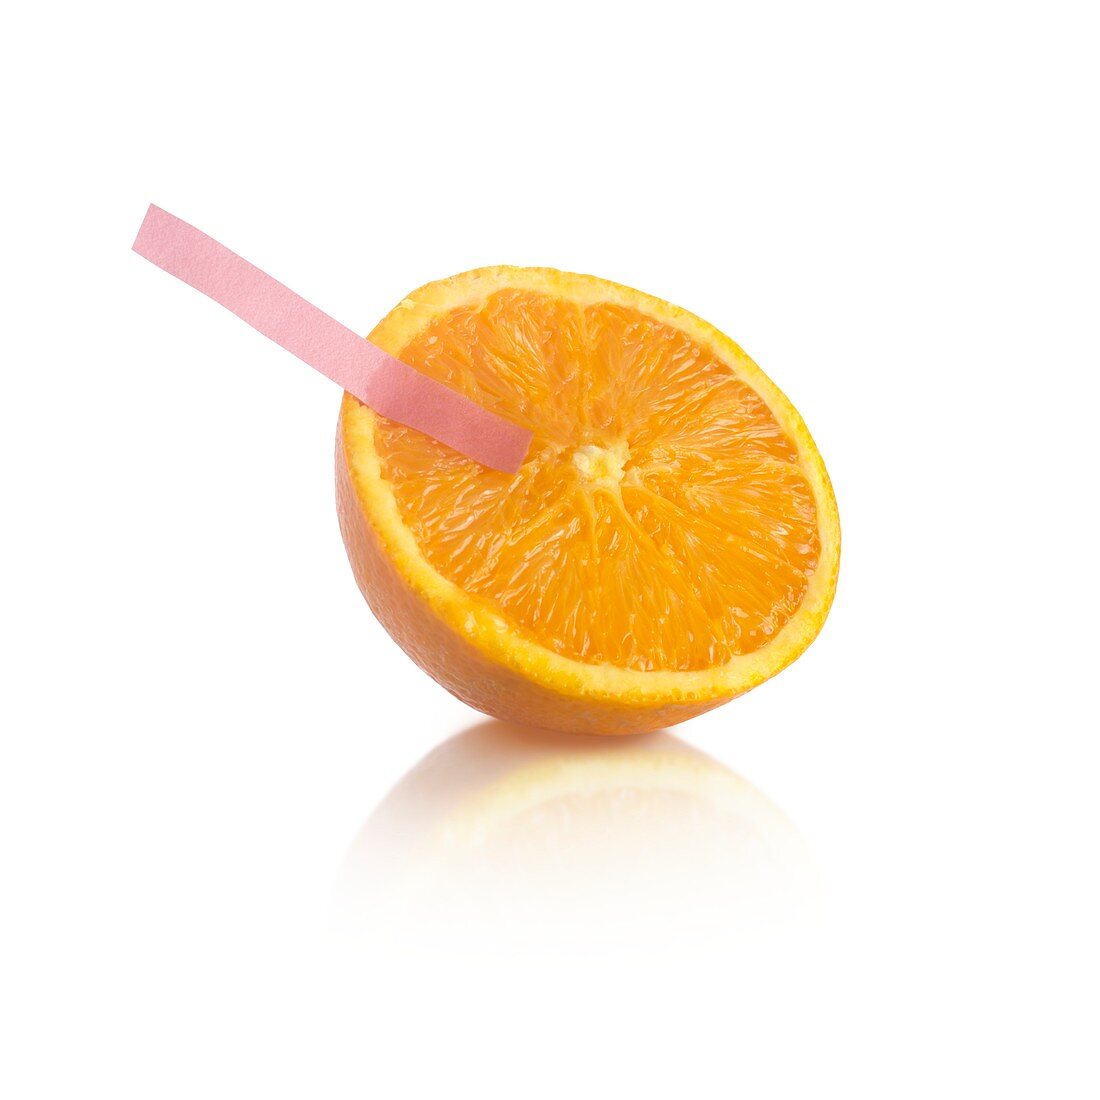 Litmus paper test on an orange